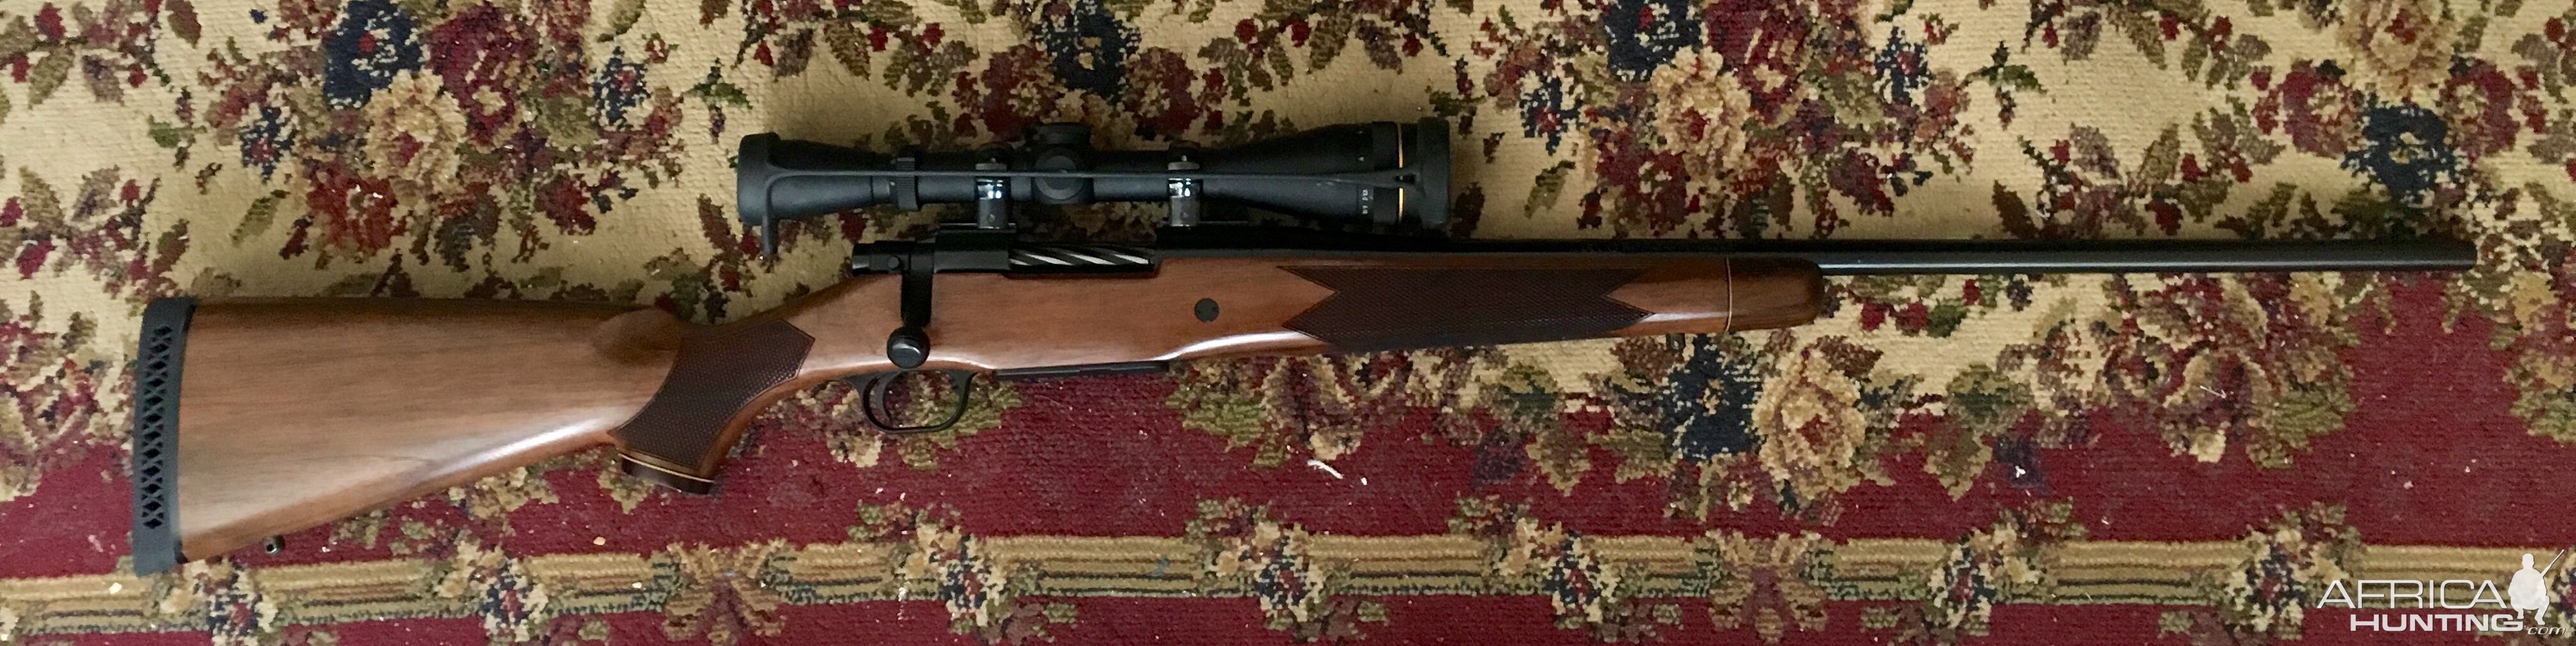 Mossberg Rifle in 6.5 Creedmoor